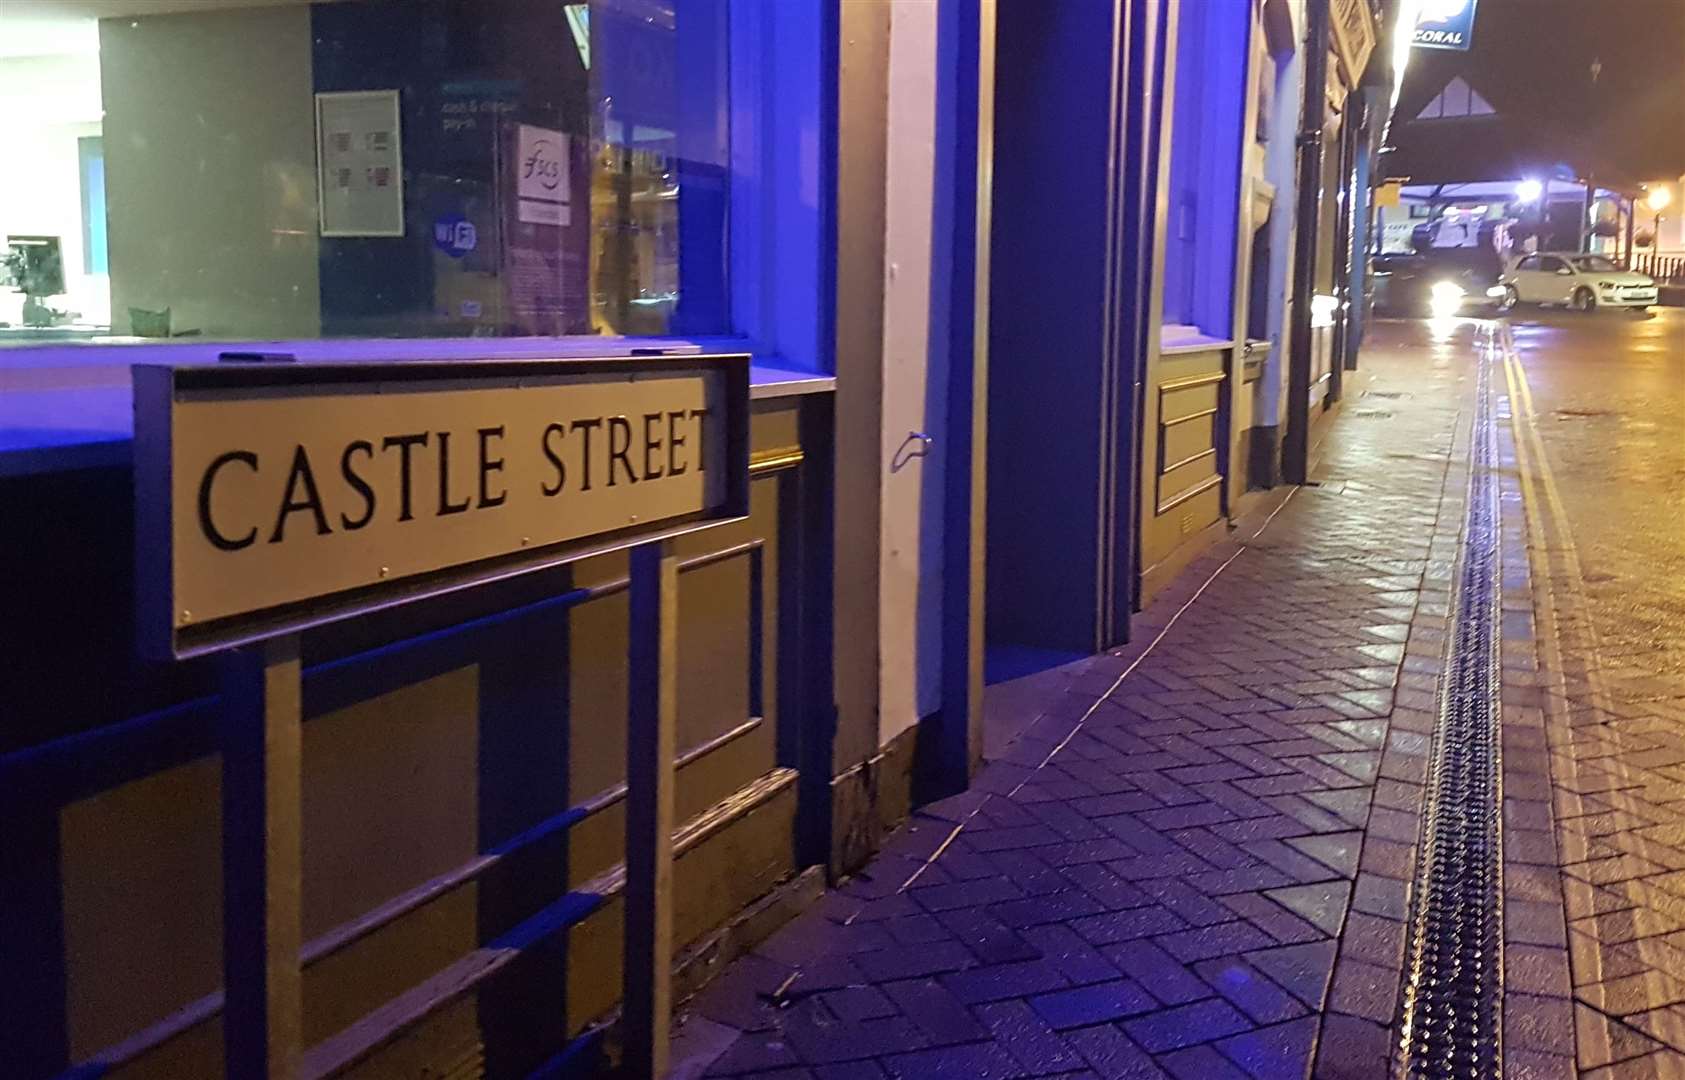 The drama unfolded in Castle Street